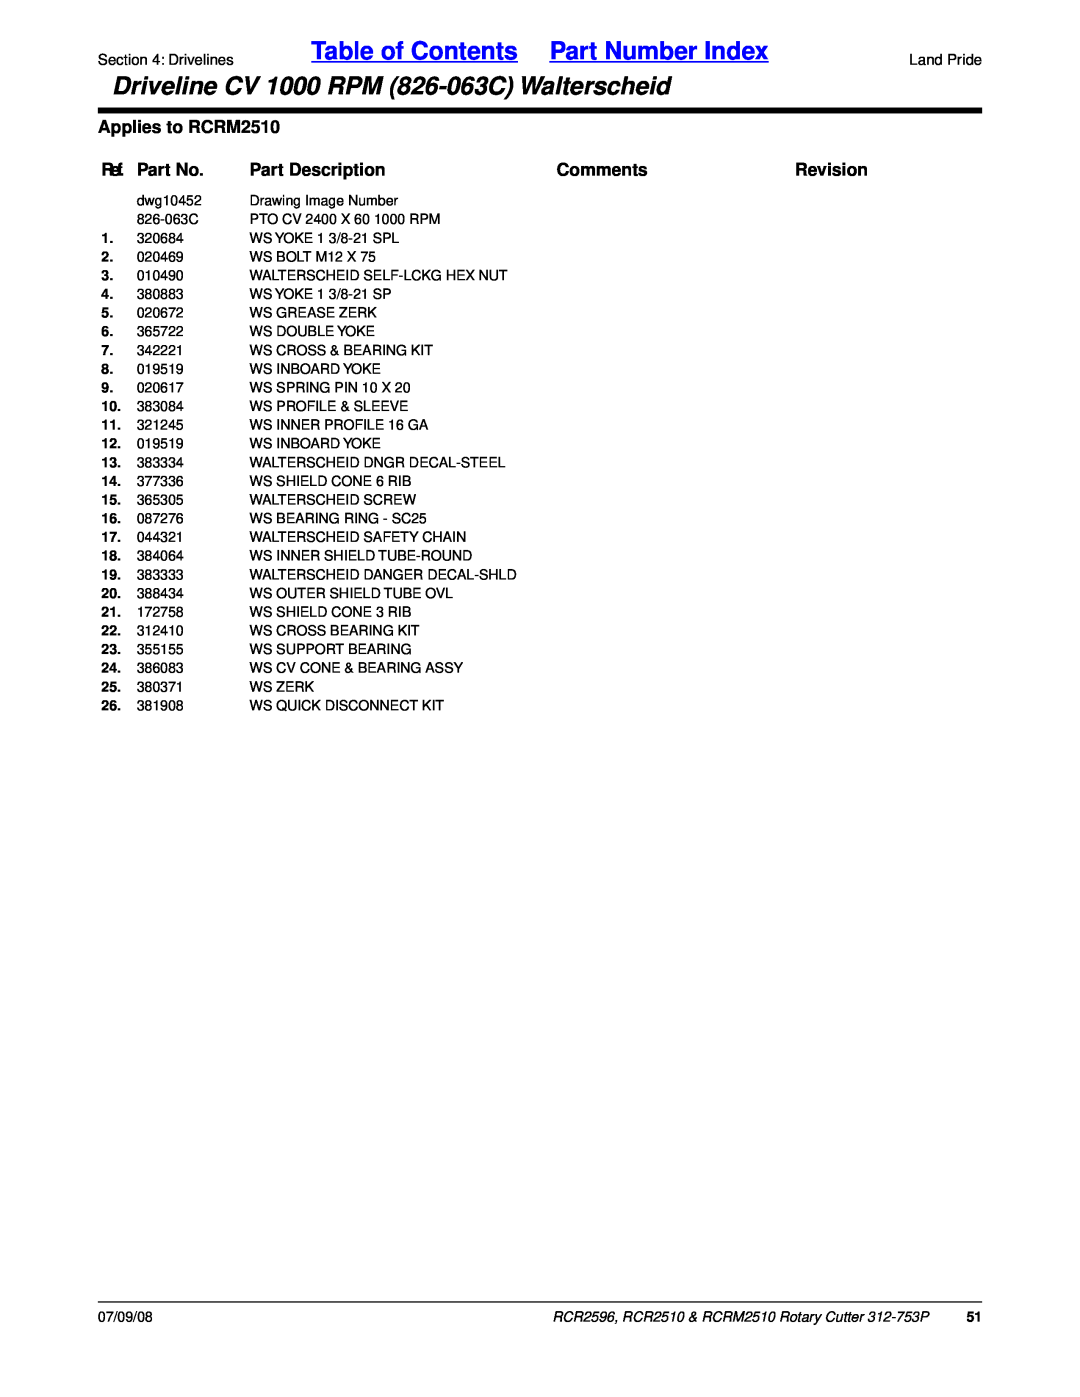 Land Pride RCR2596 Table of Contents Part Number Index, Driveline CV 1000 RPM 826-063CWalterscheid, Applies to RCRM2510 